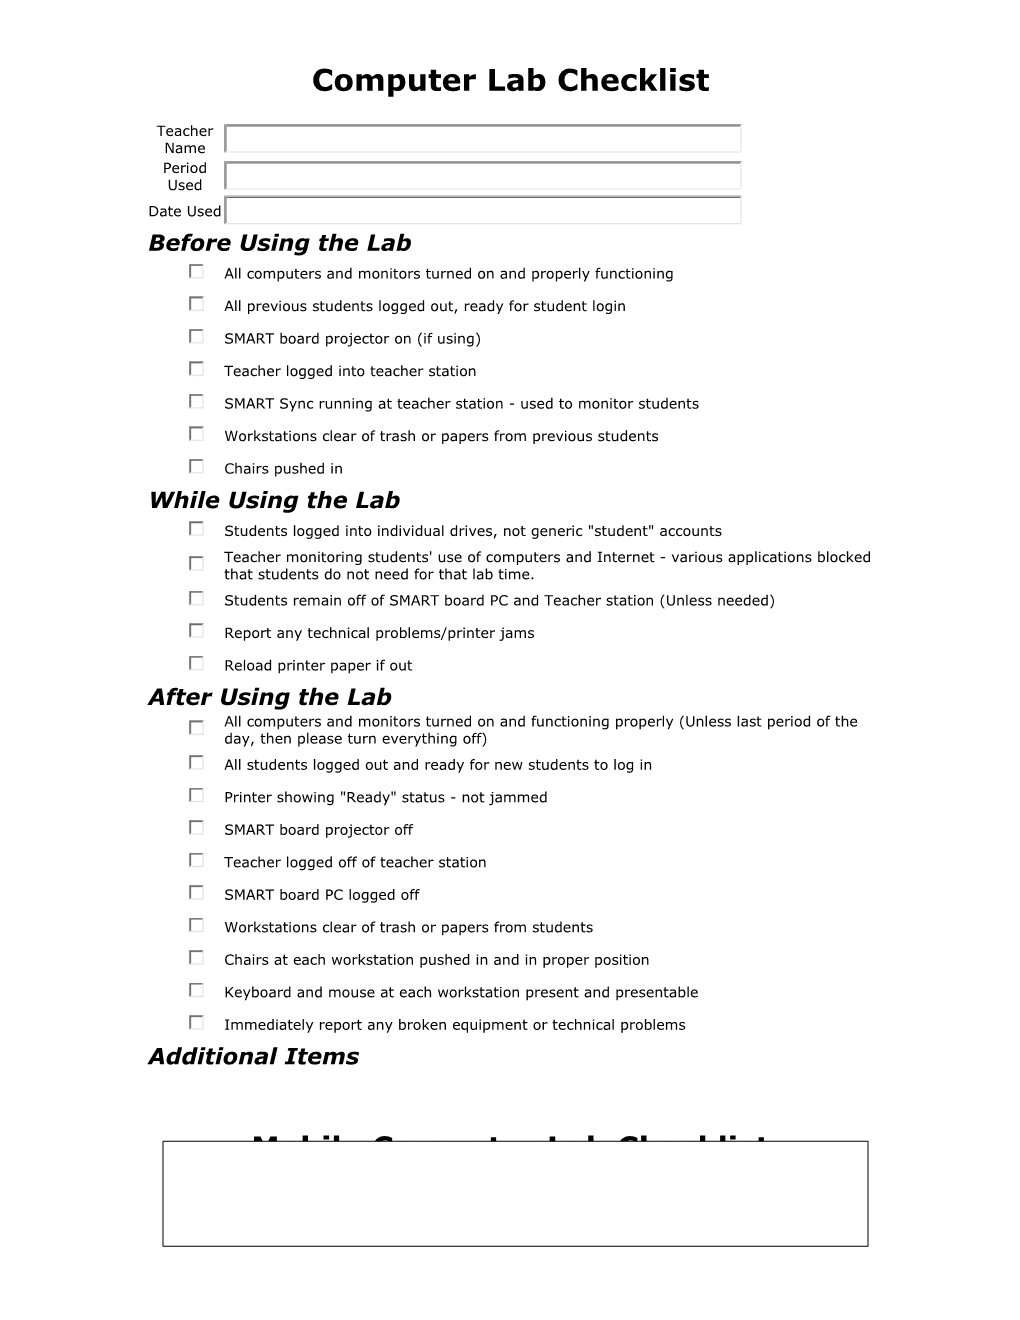 Computer Lab Checklist